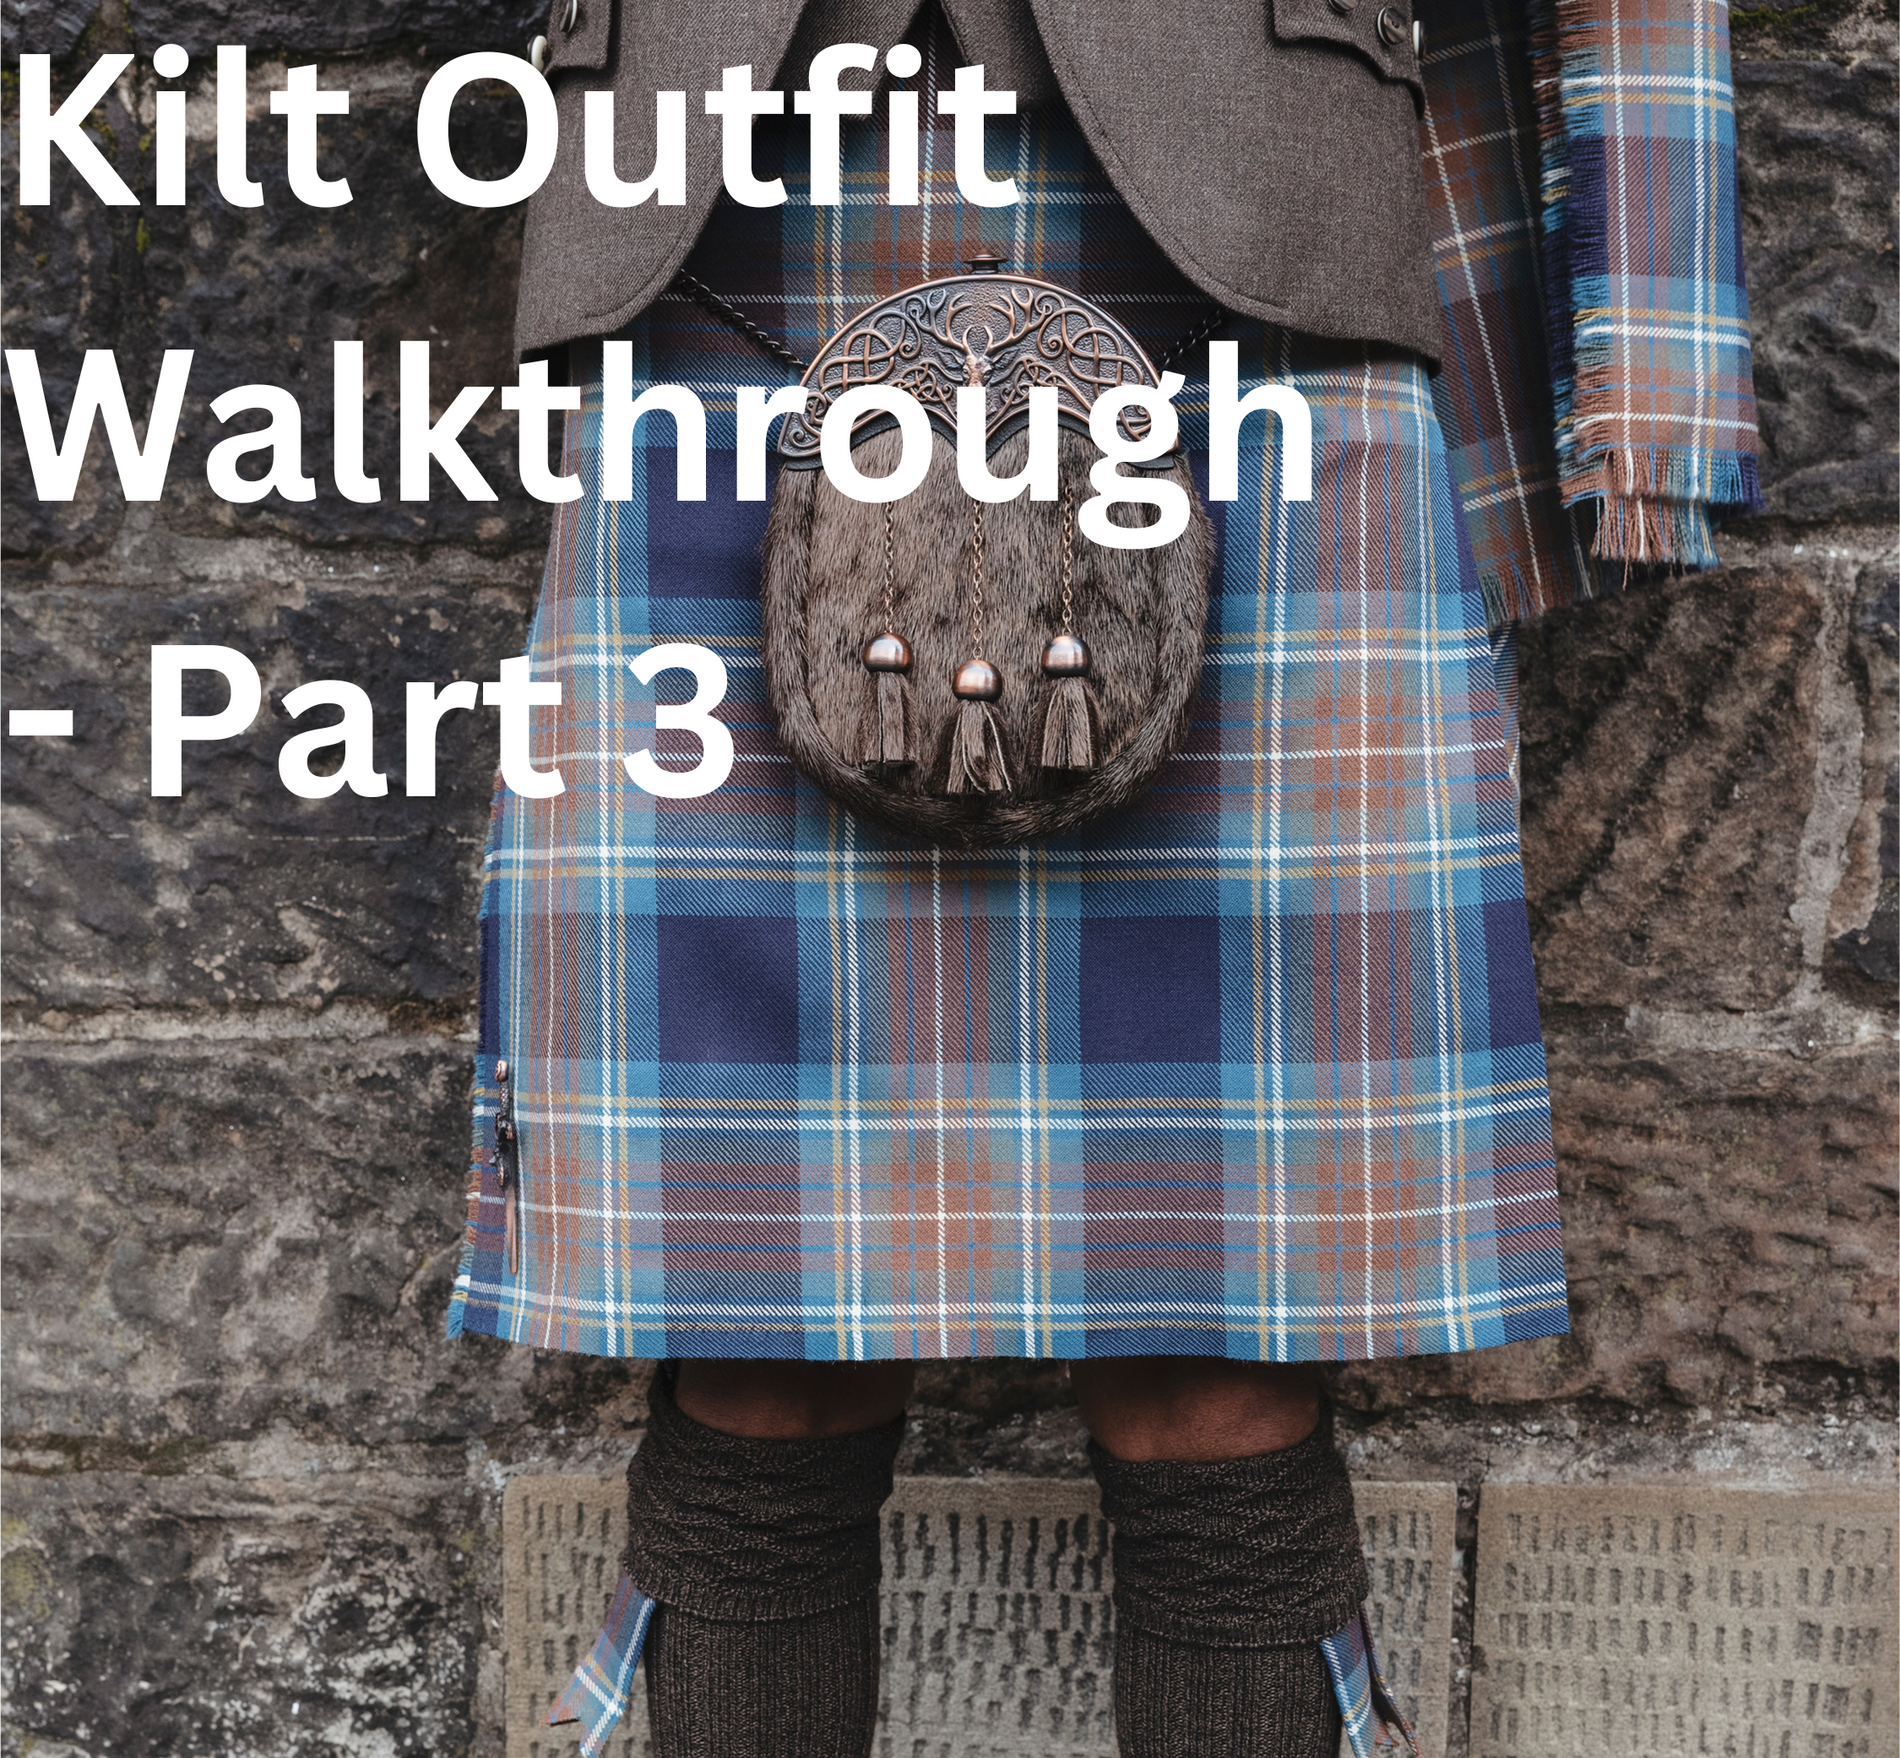 Kilt Outfit Walkthrough - Part 3